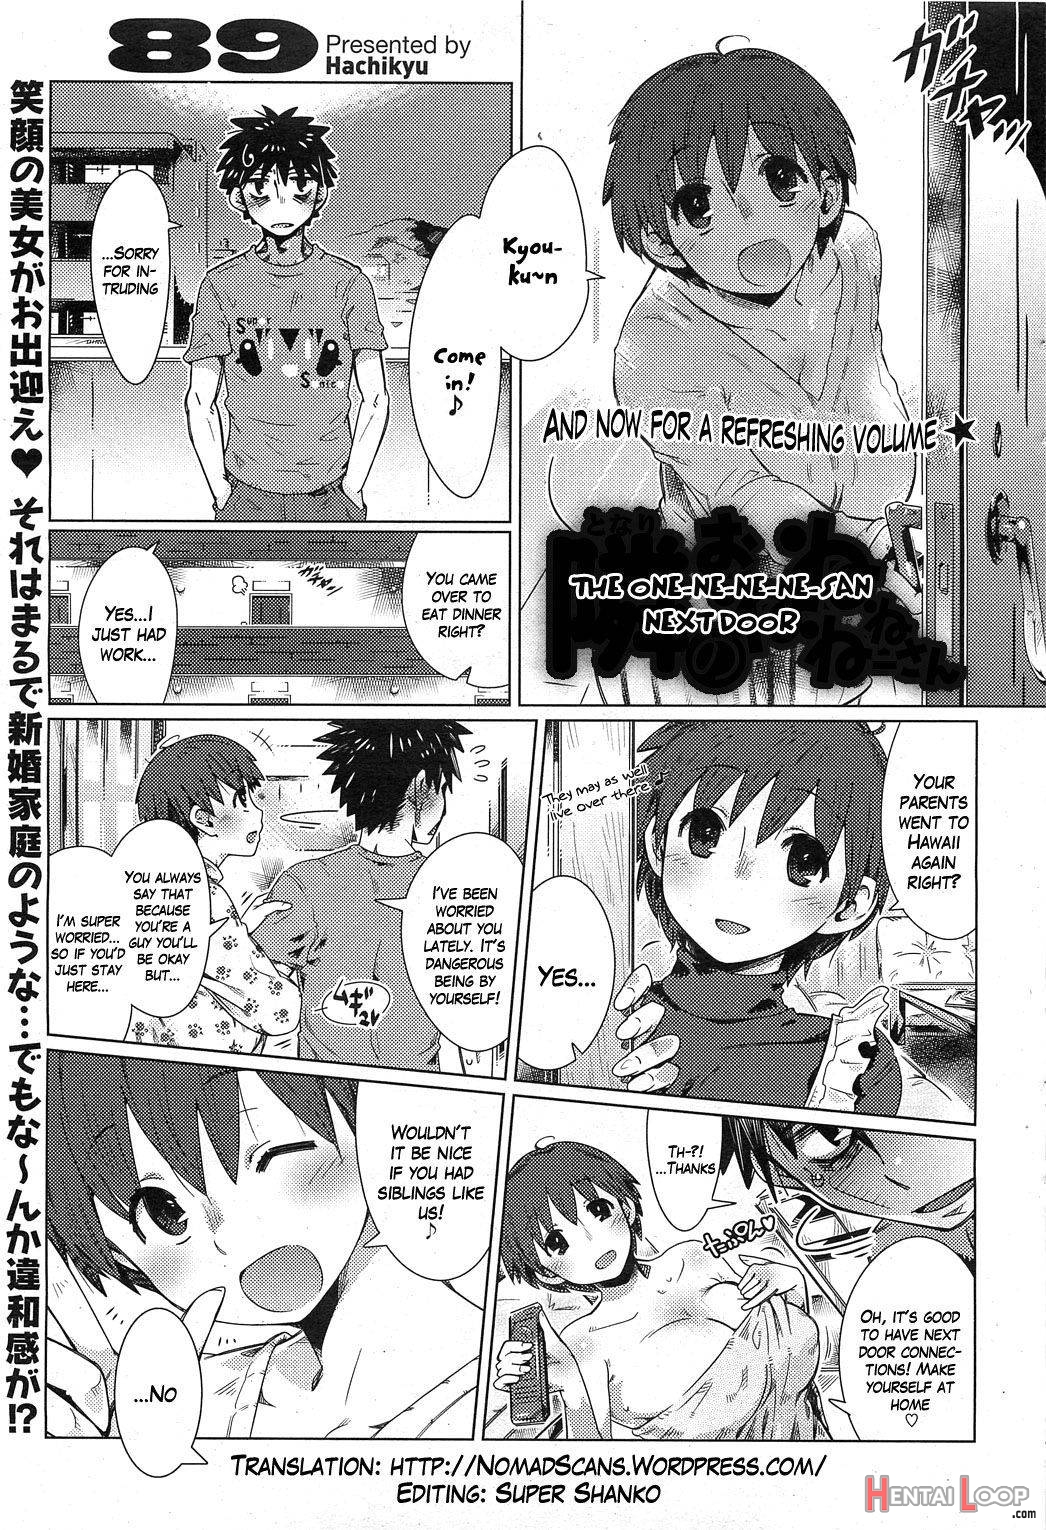 The One-ne-ne-ne-san Next Door page 1